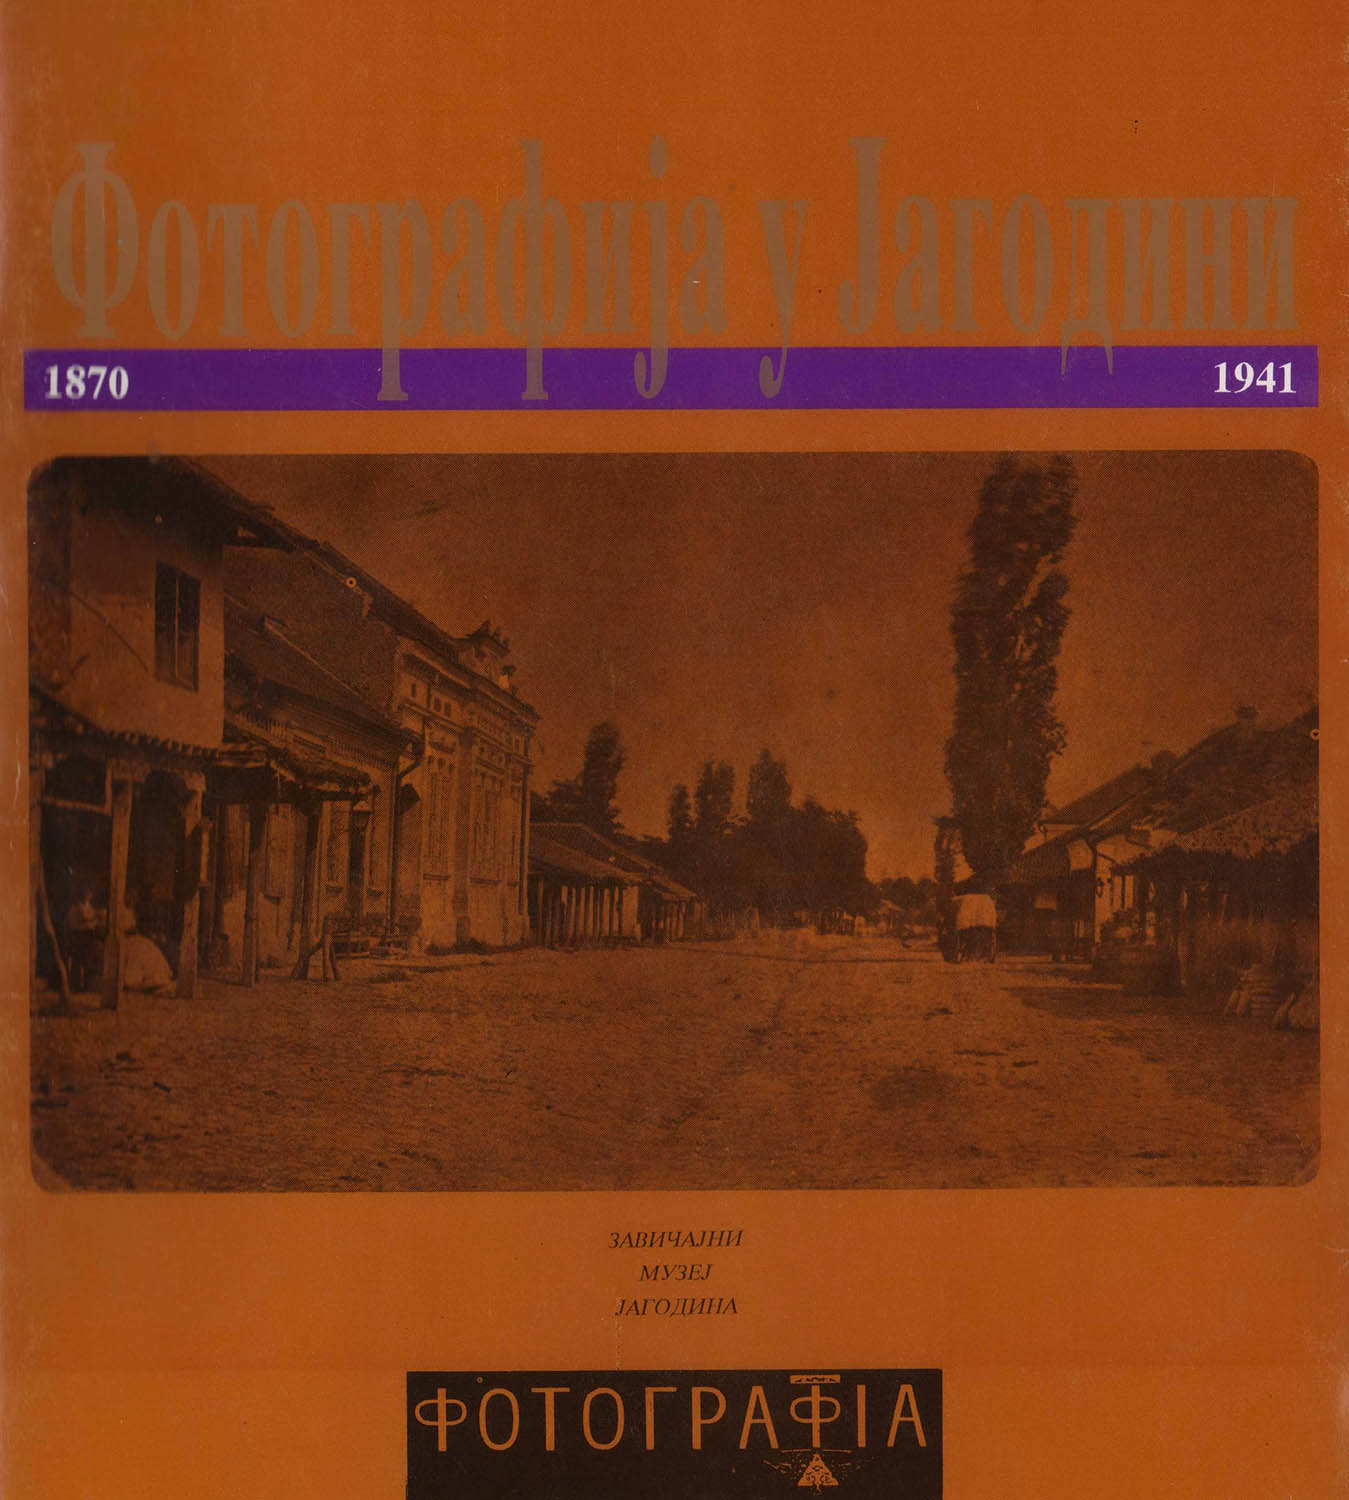 Photography in Jagodina: 1870-1941